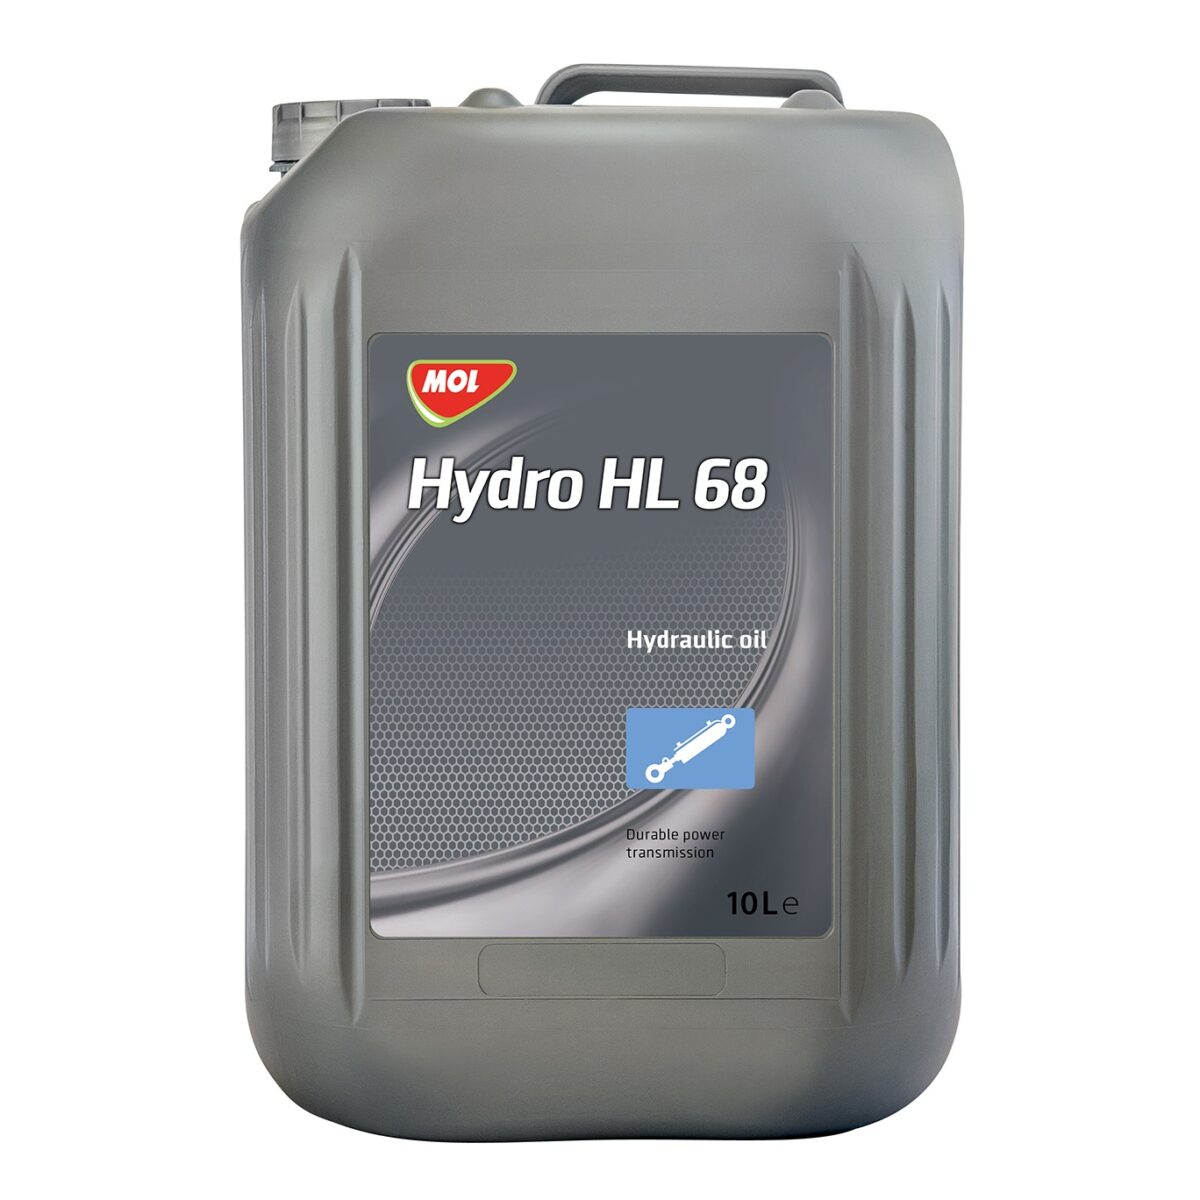 10L MOL Hydro HL 68